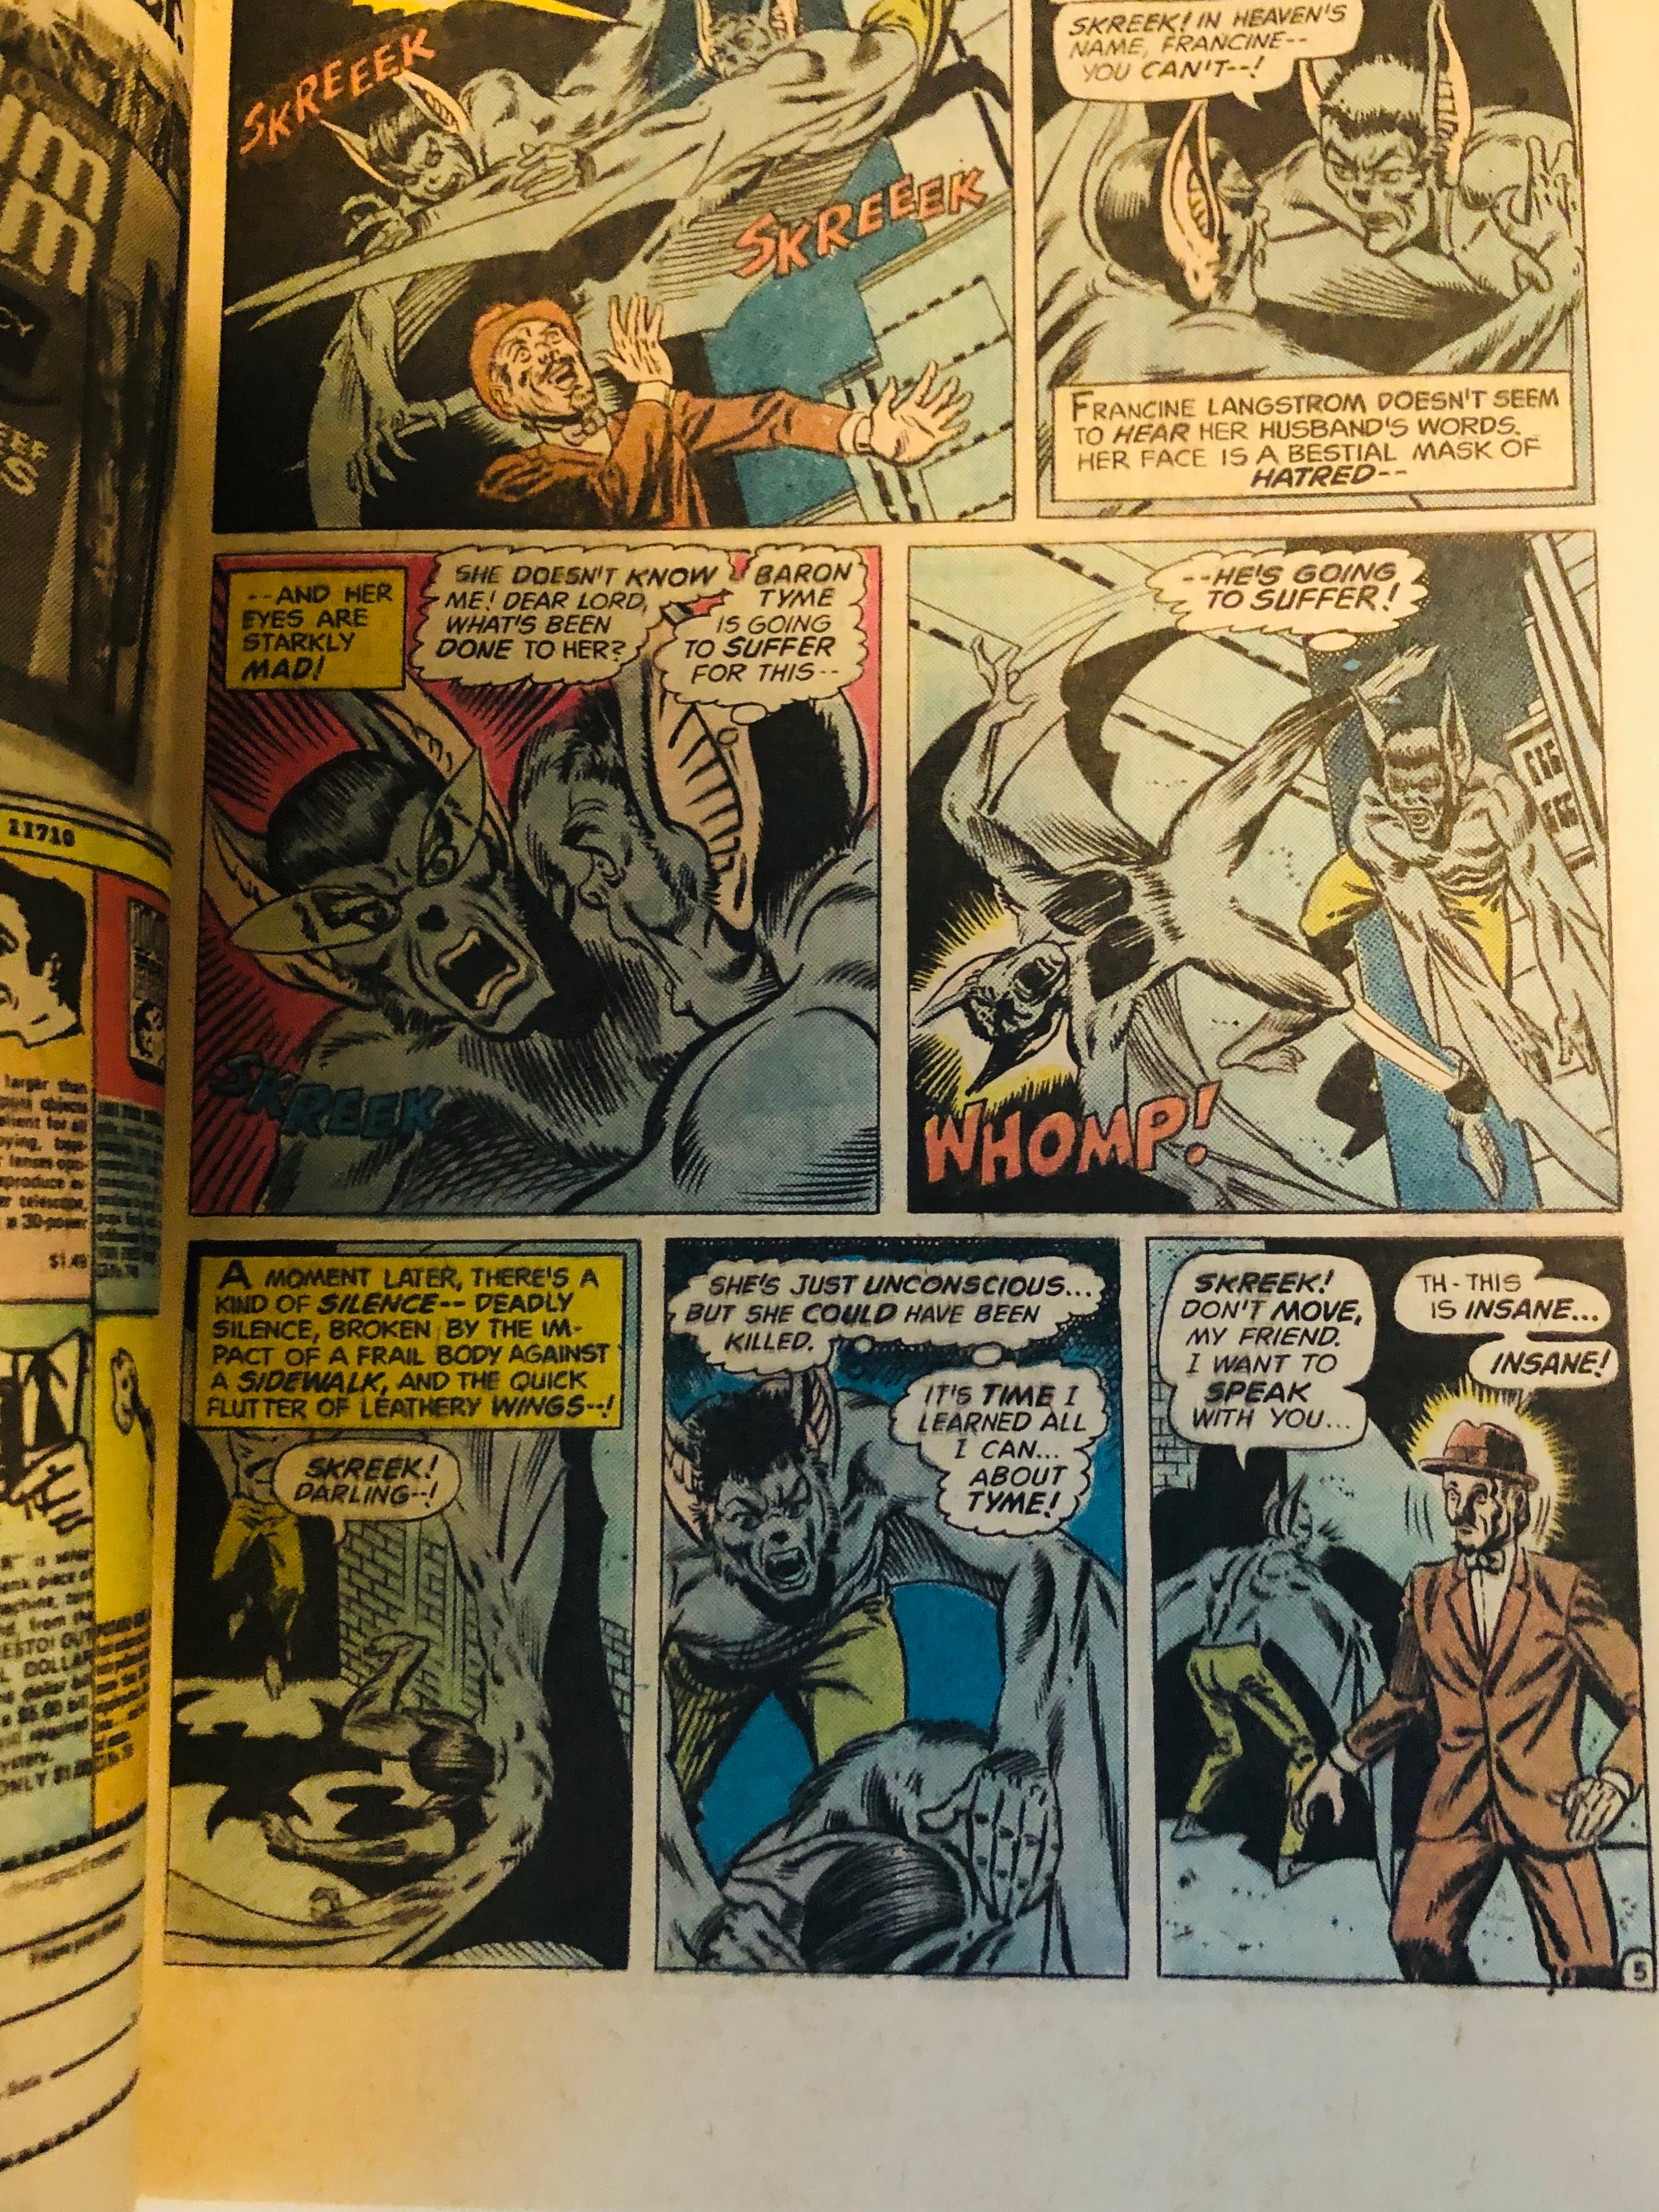 Batman Man-Bat #1 high grade comic book 1975